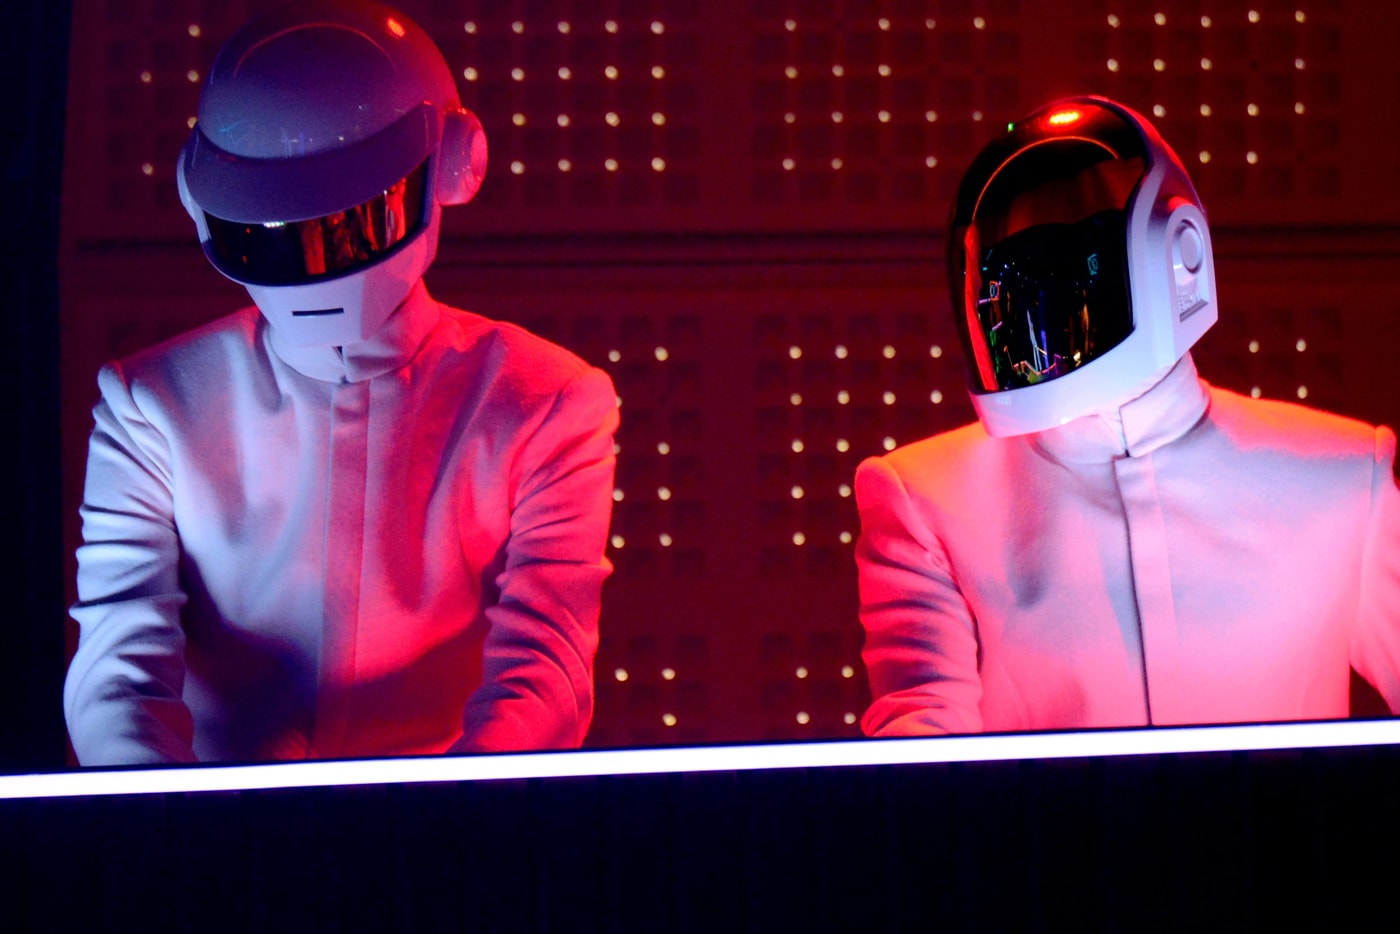 Daft Punk Will Score Dario Argento's New Film movie 'Occhiali Neri' electronic music Thomas Bangalter, Guy-Manuel de Homem-Christo french electro house touch 